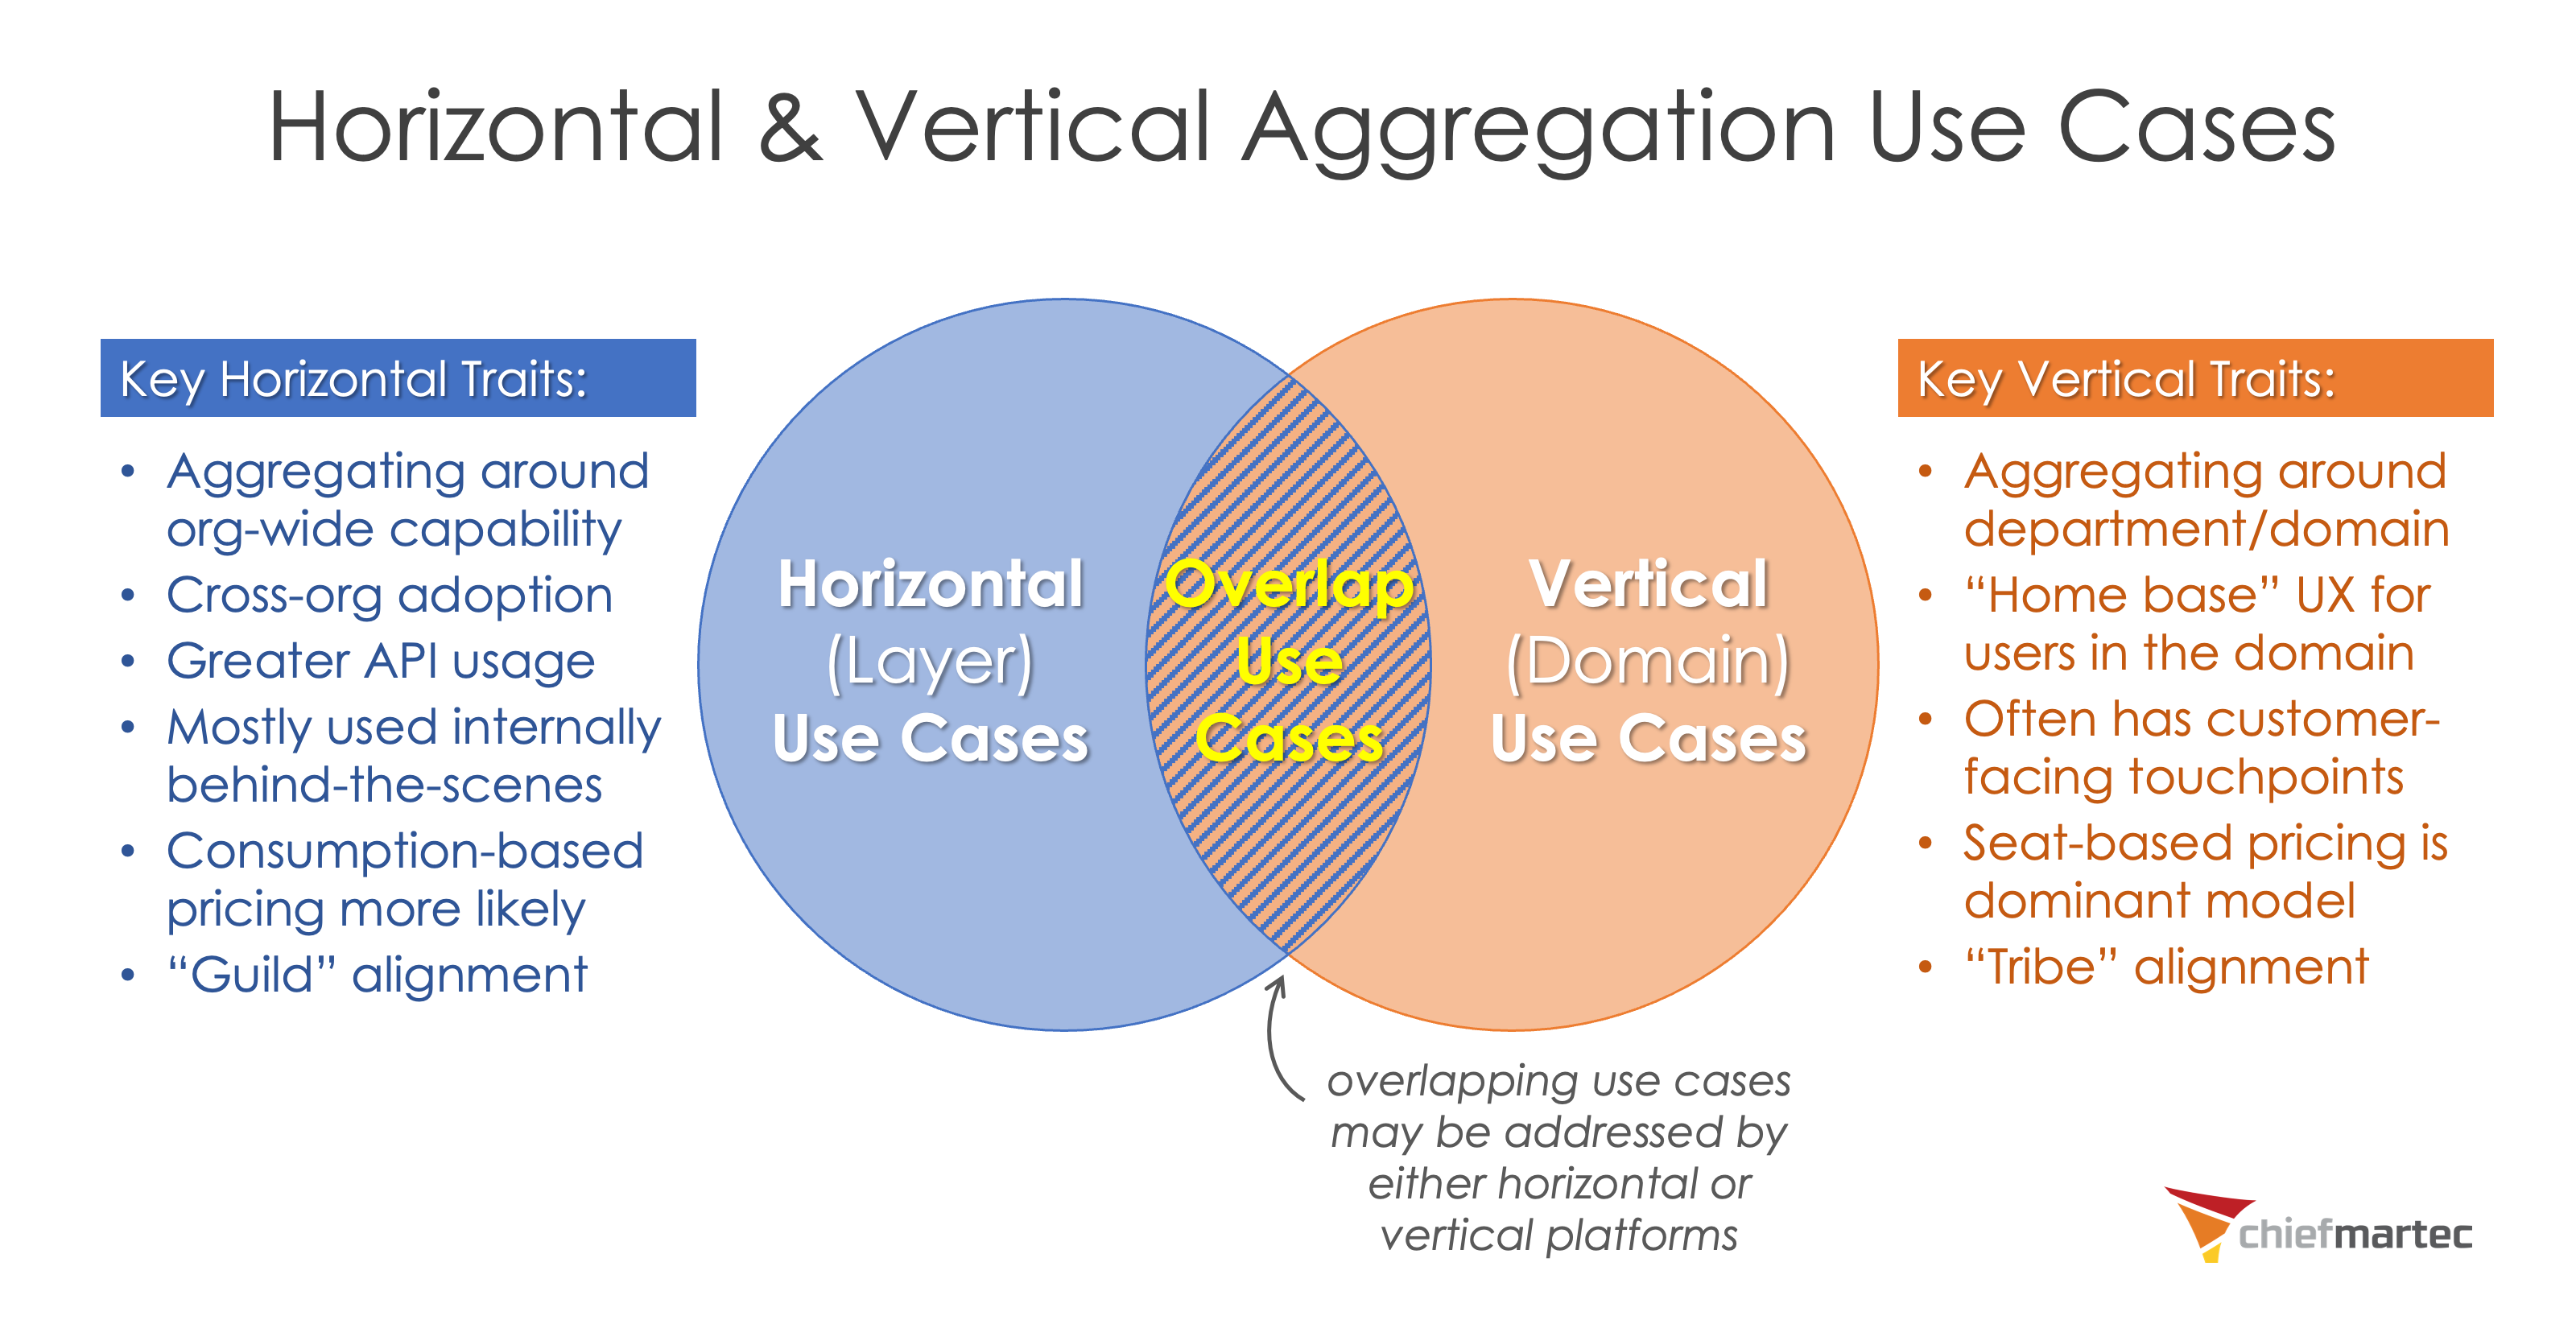 Horizontal and Vertical Aggregation Platform Use Cases